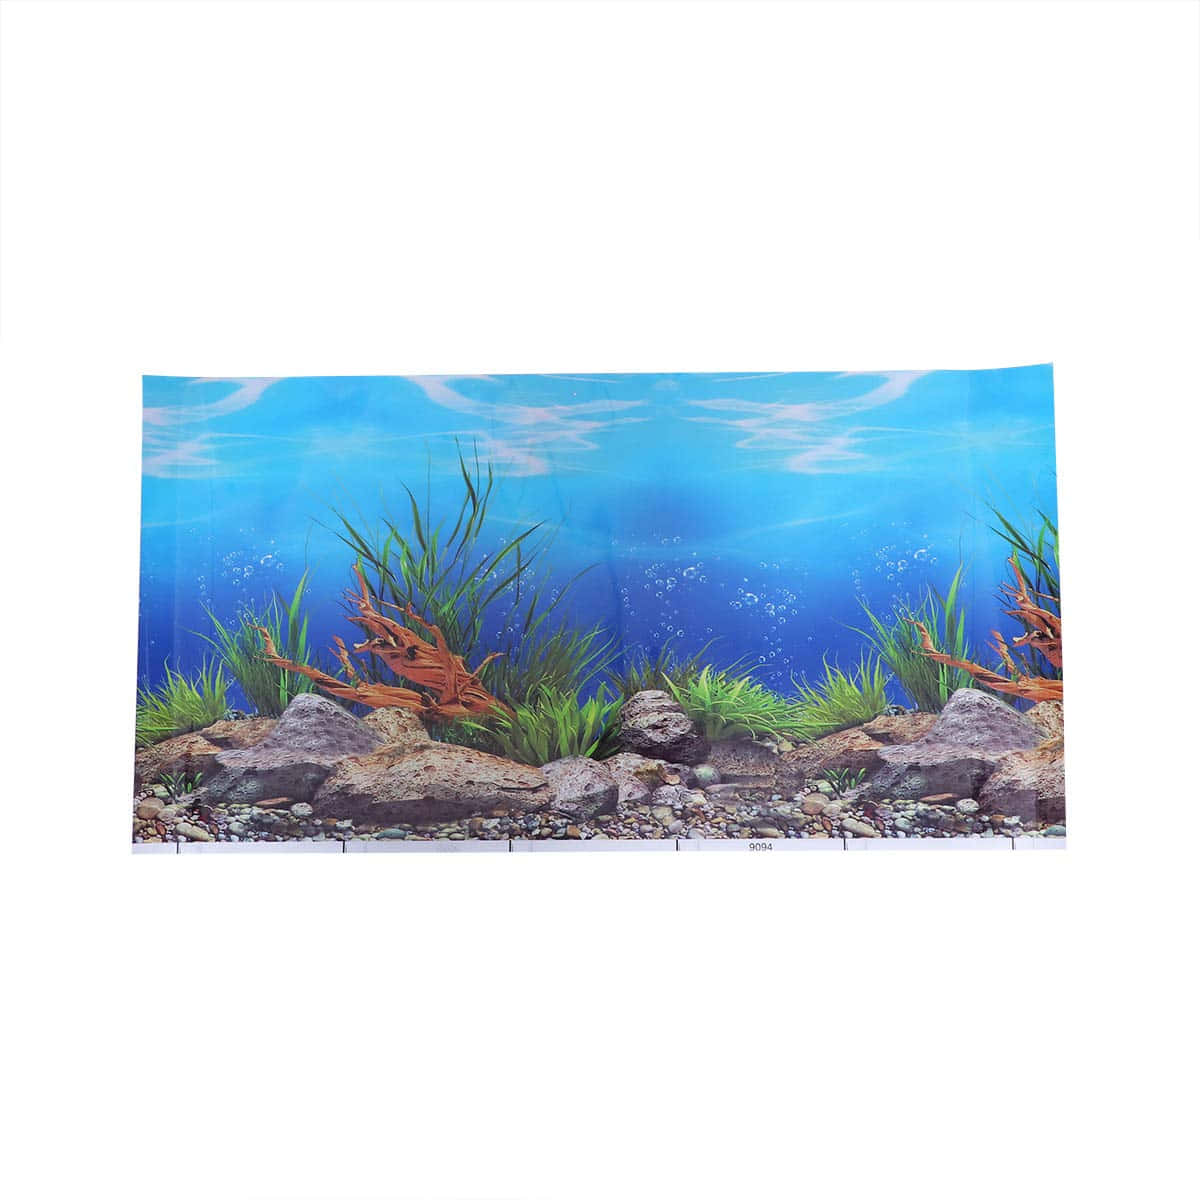 Underwater Beauty in an Aquarium Fish Tank Wallpaper